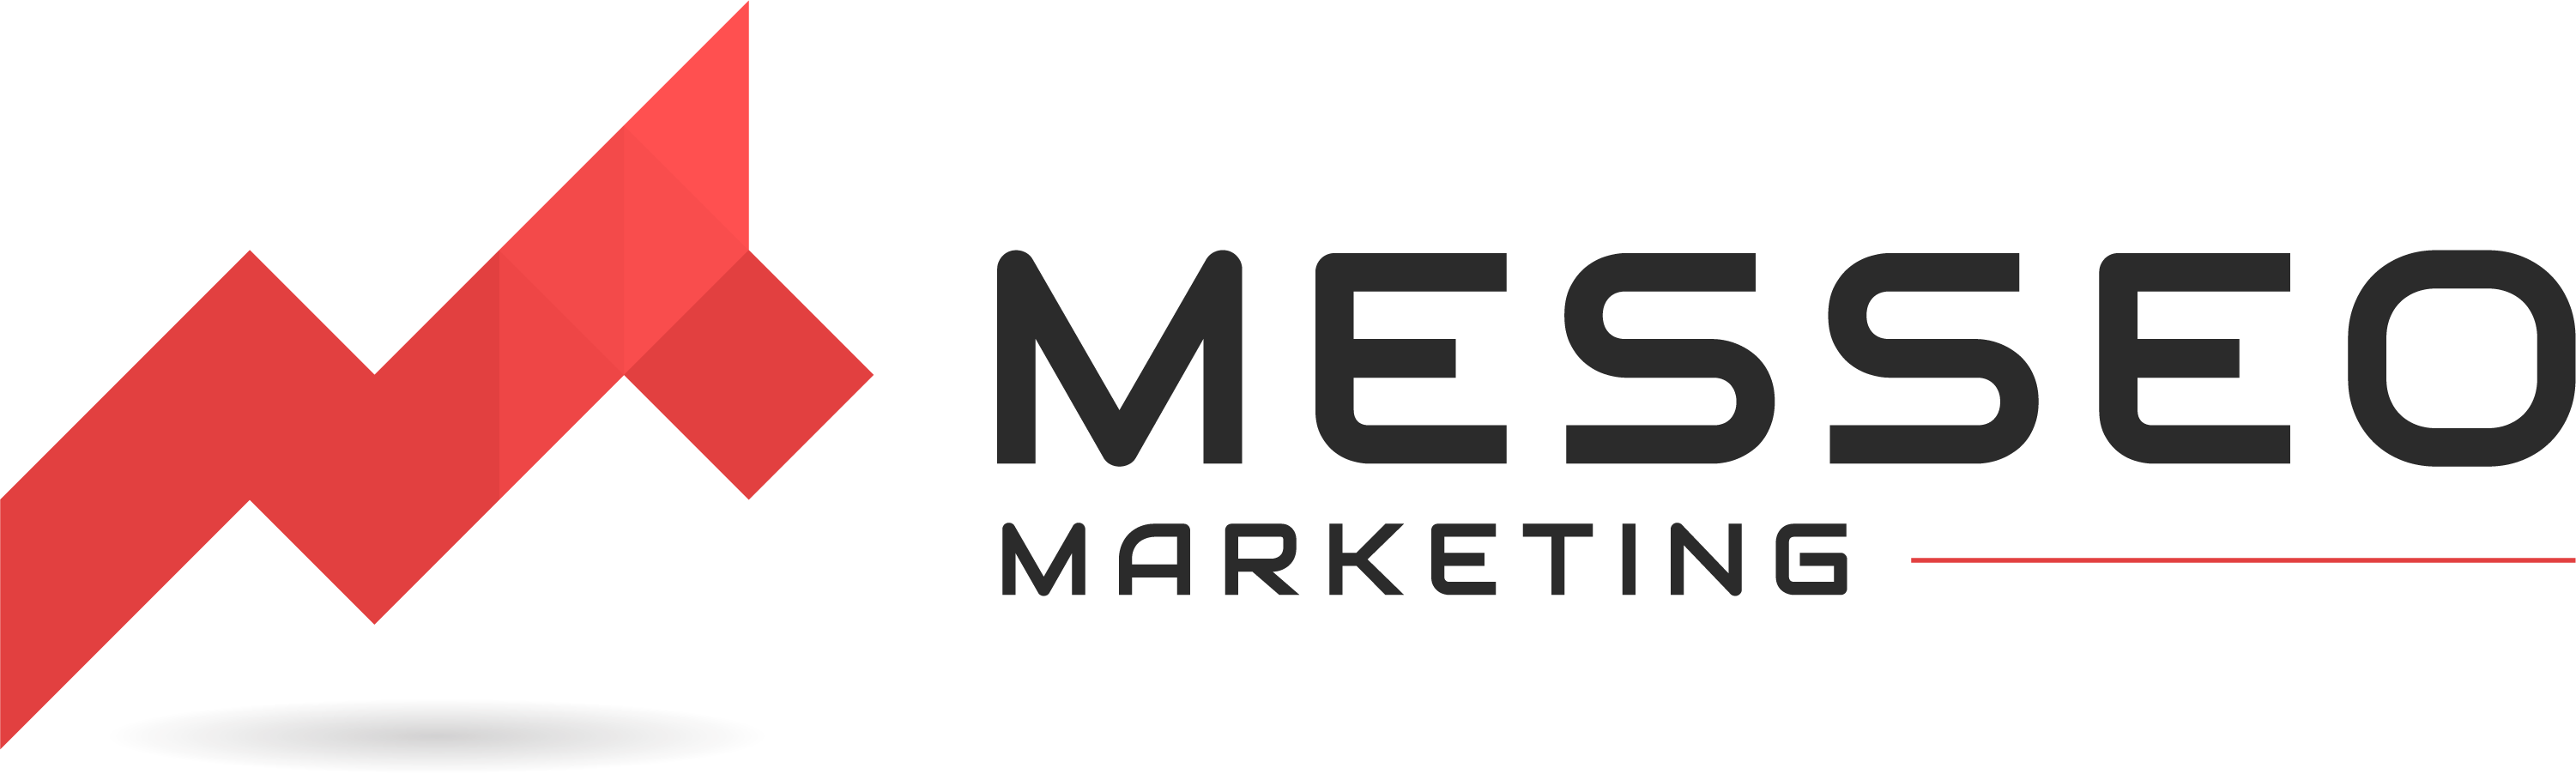 MESSEO Marketing